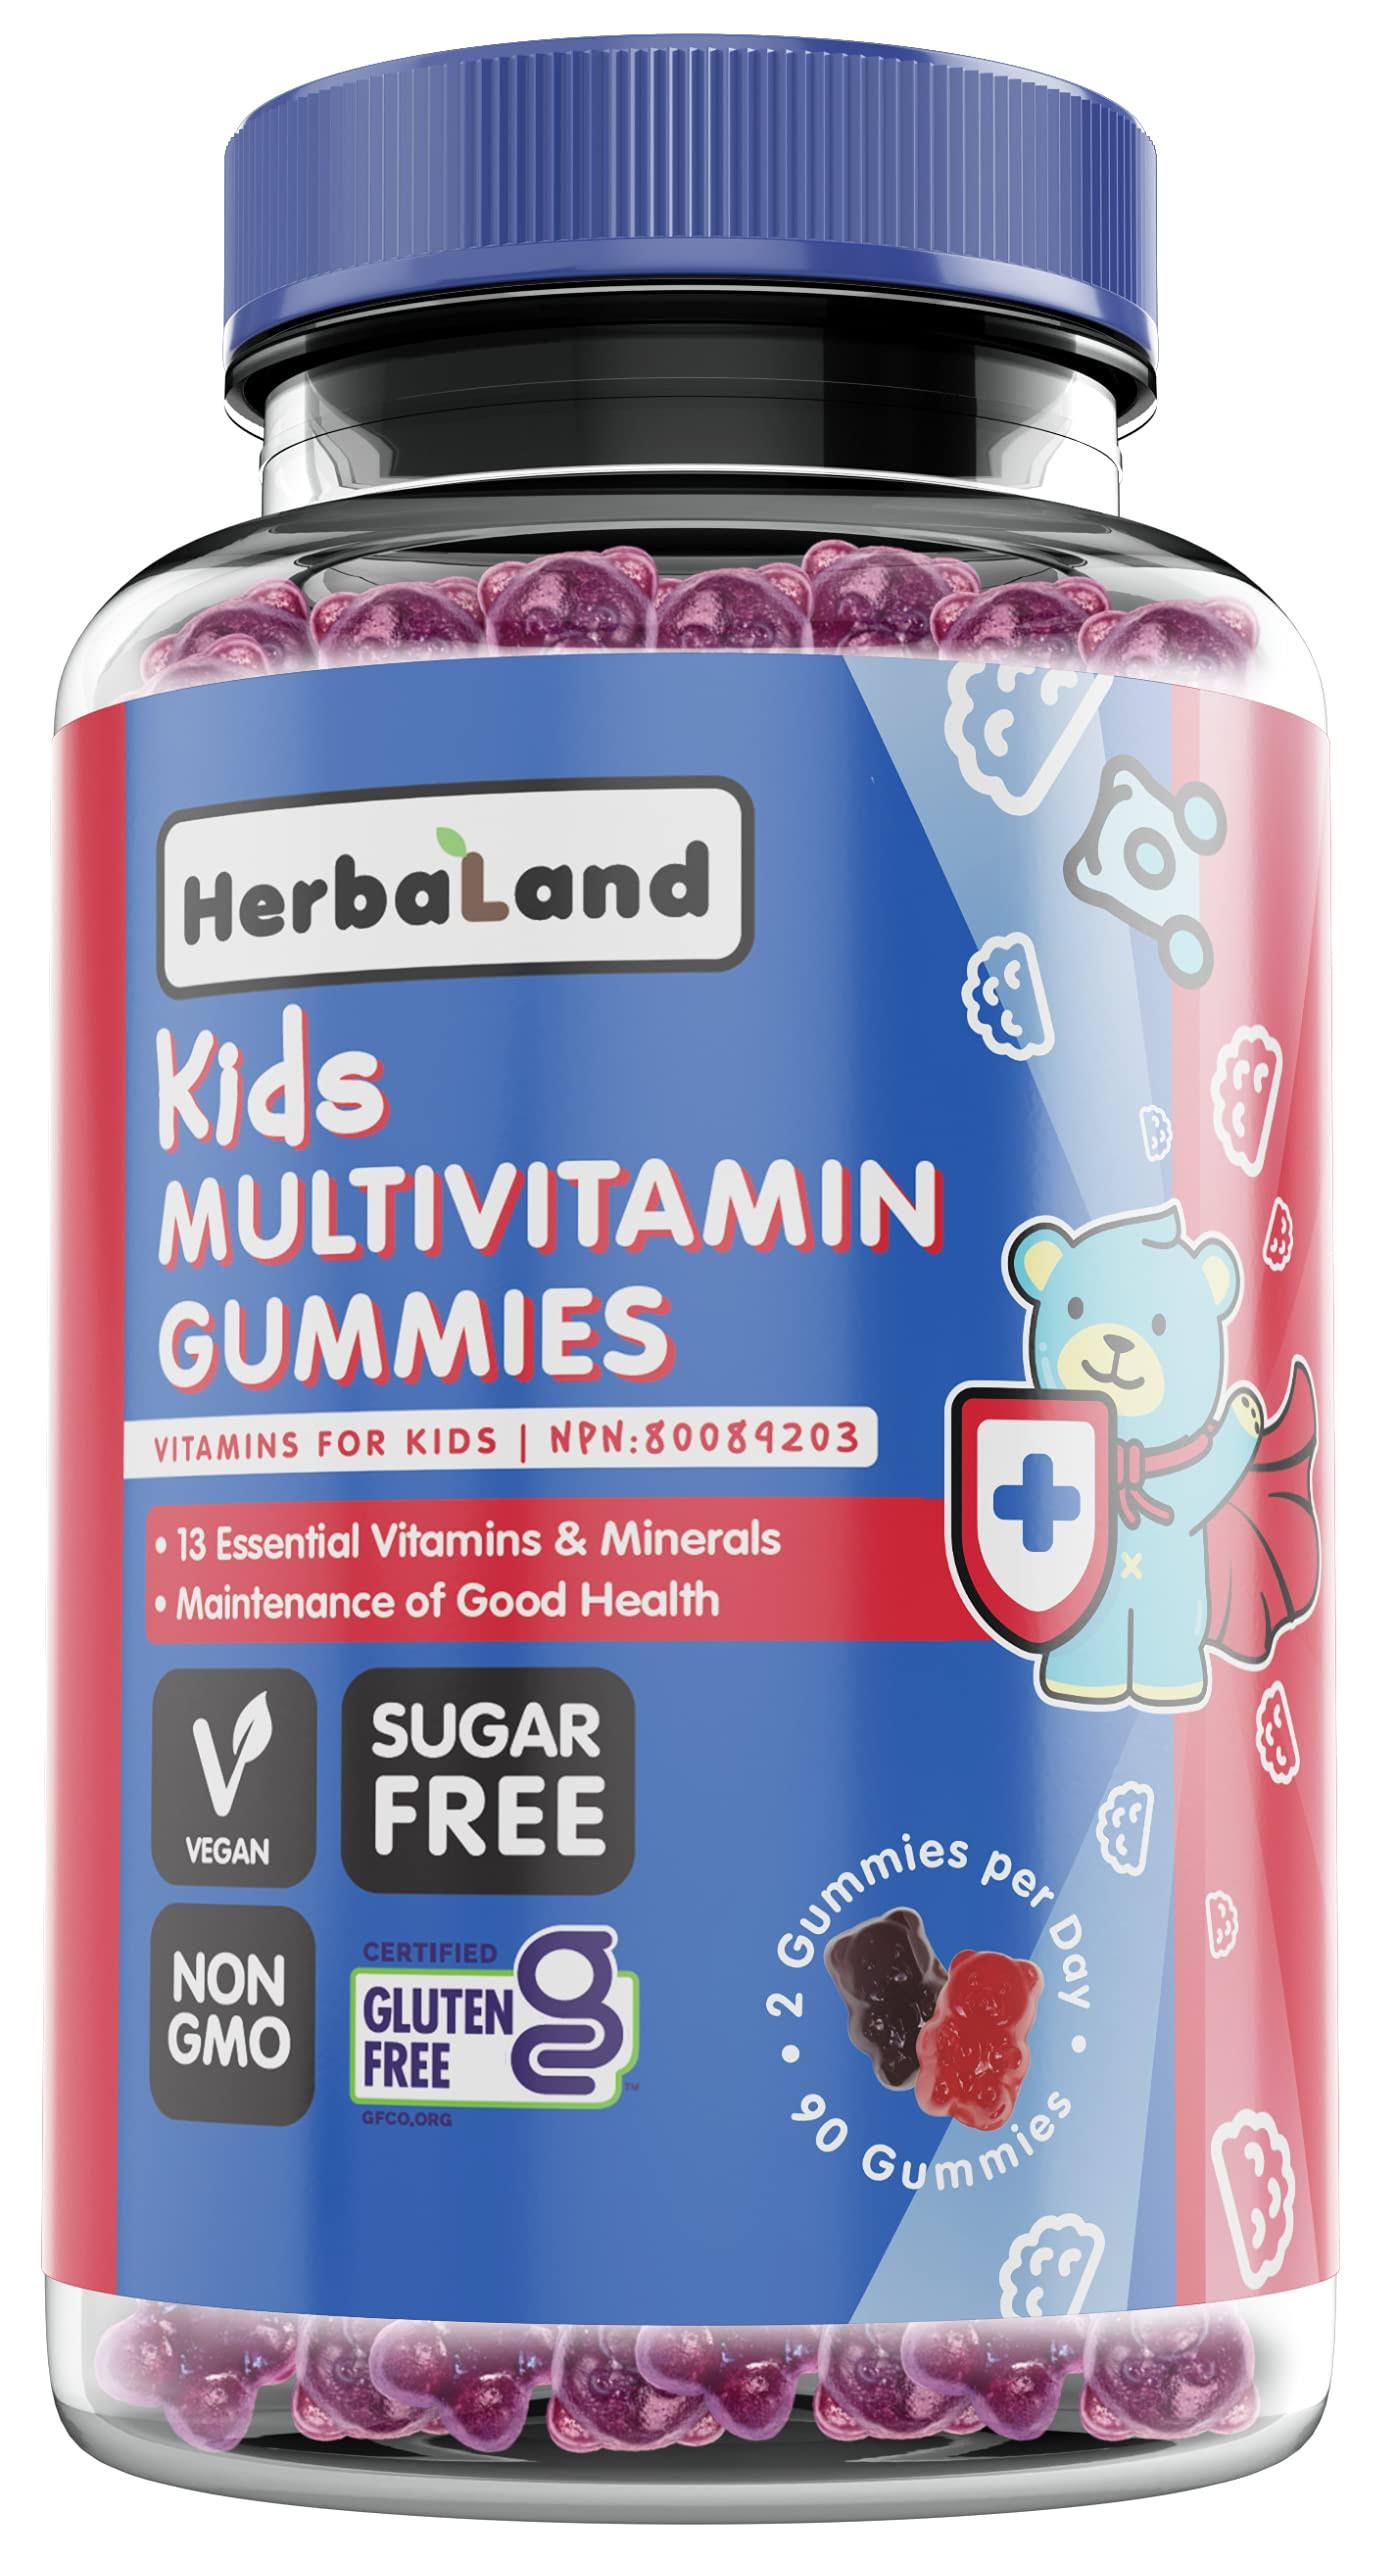 Herbaland Gummies for Kids Multivitamin 90 Gummies